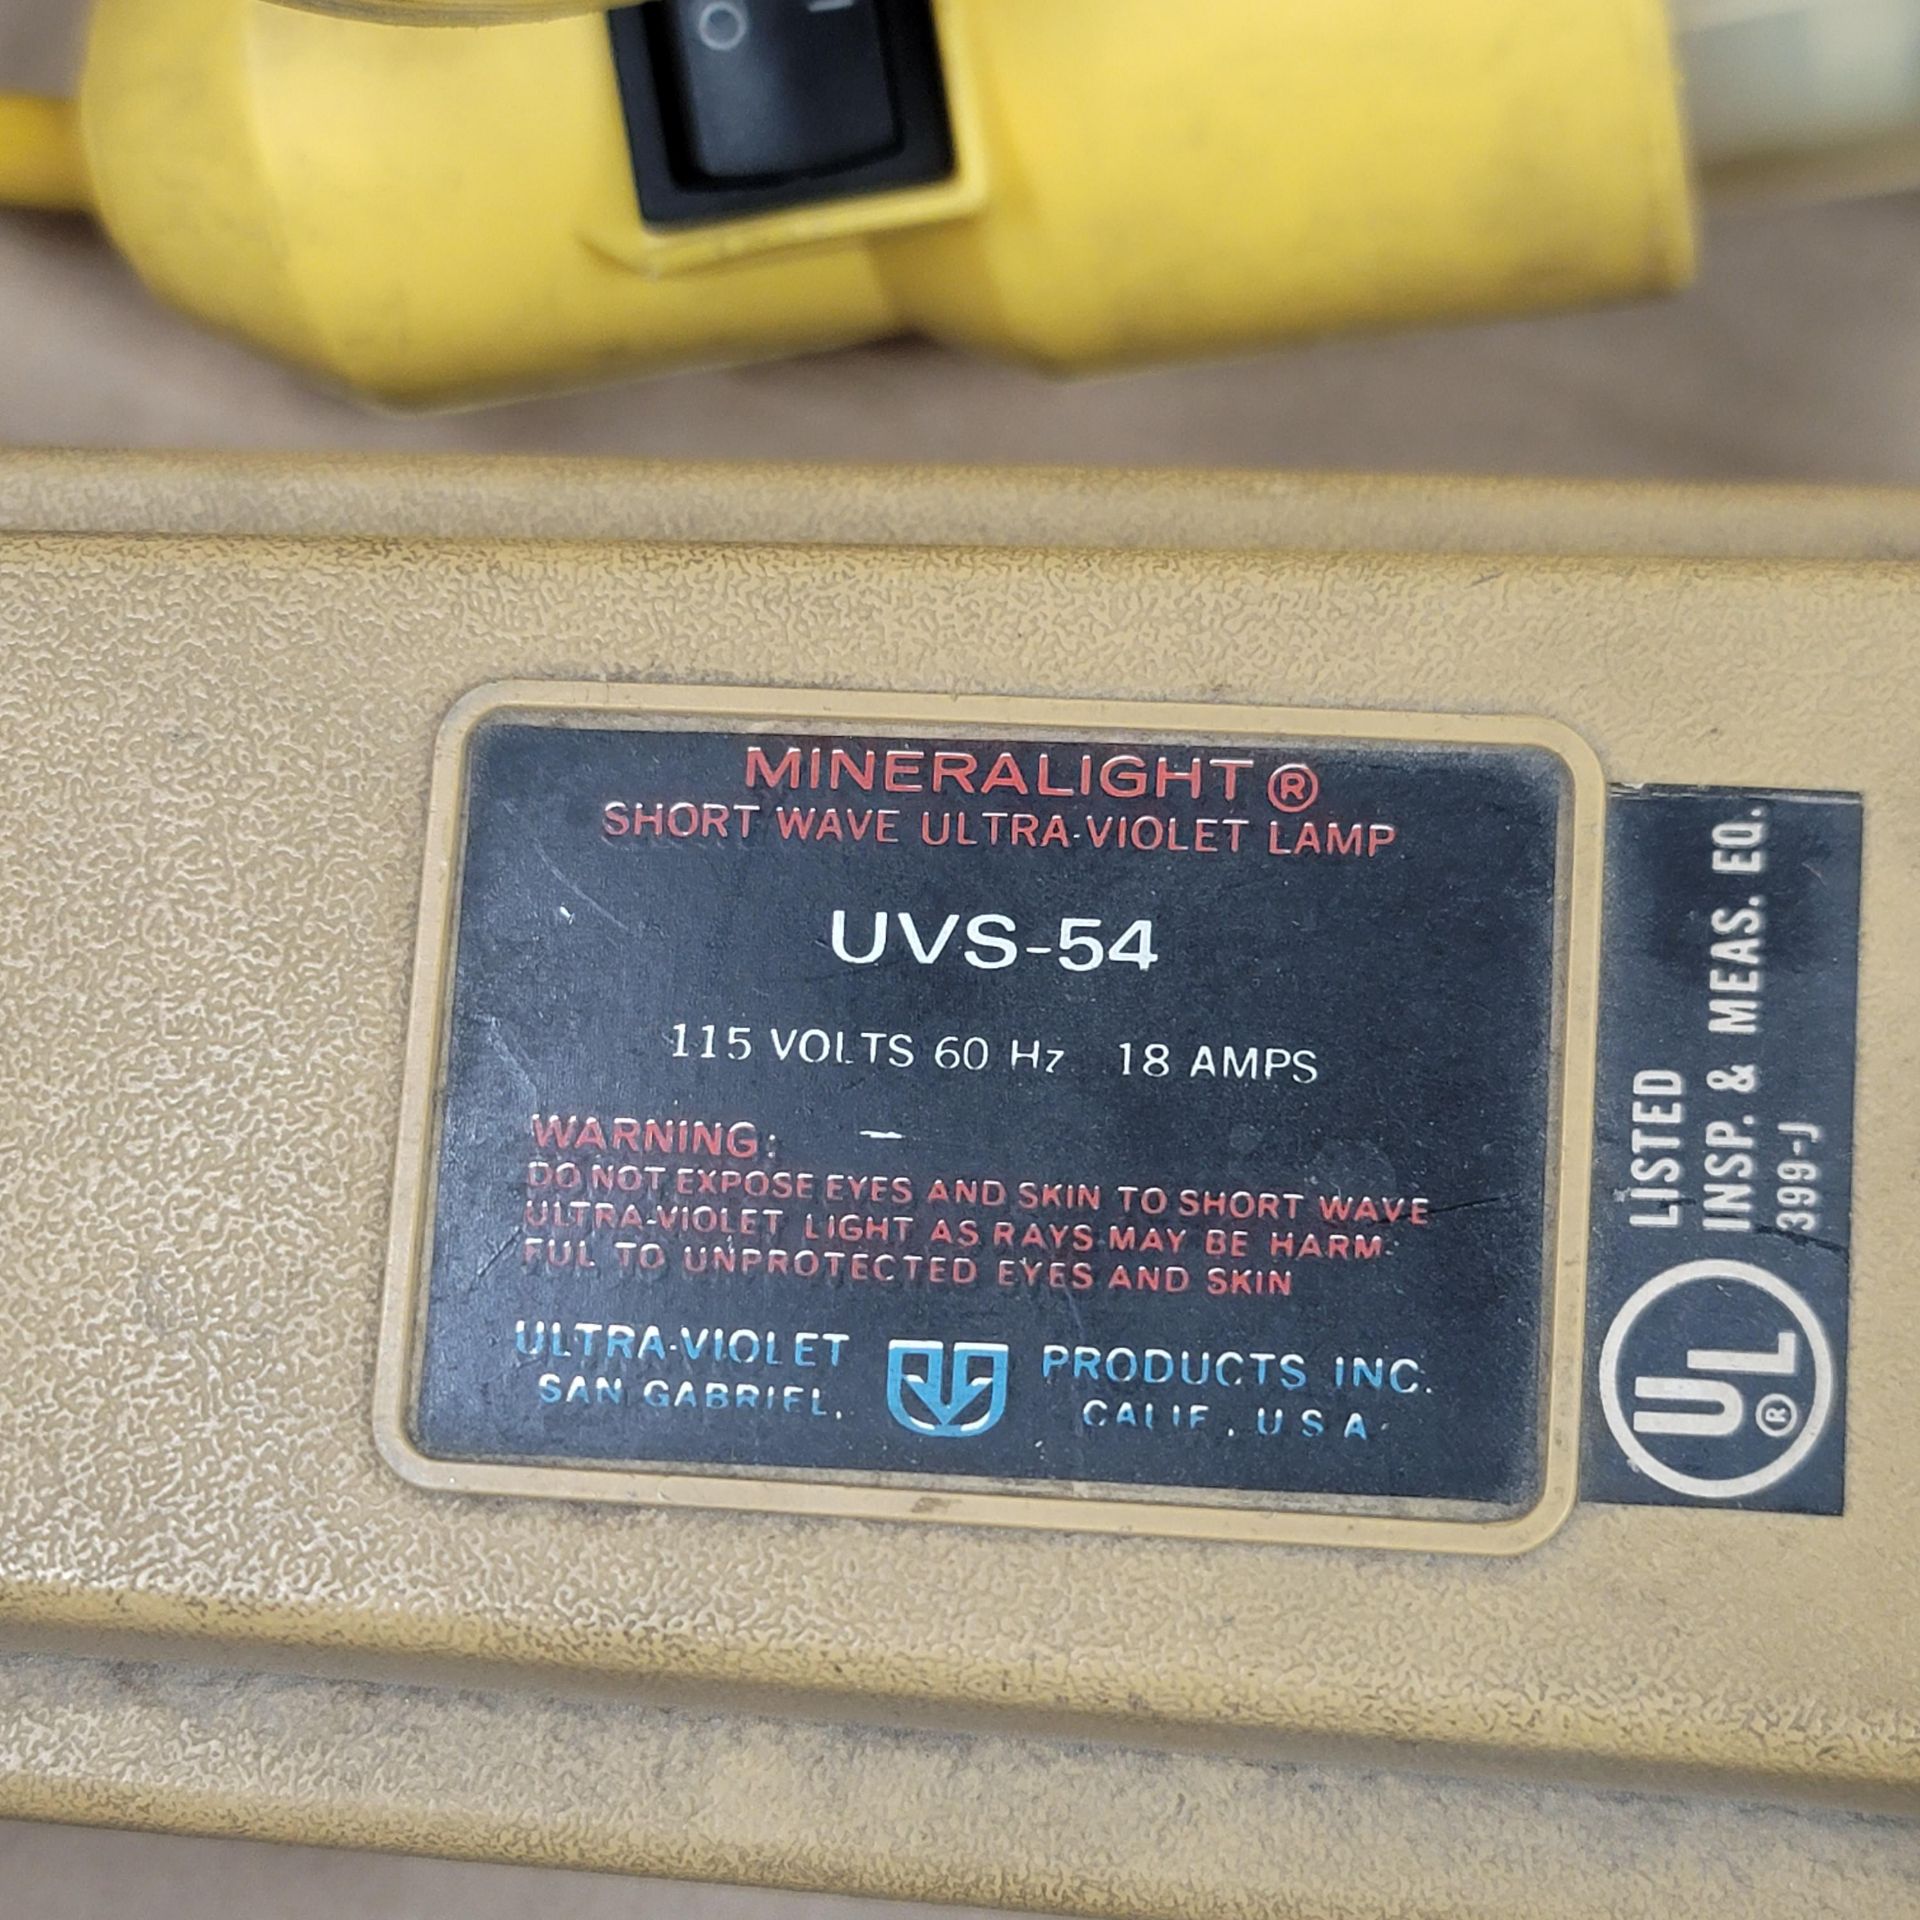 LOT - MINERALIGHT UVS-54 SHORT WAVE ULTRA-VIOLET LAMP, HANGING WORK LIGHT - Image 2 of 2